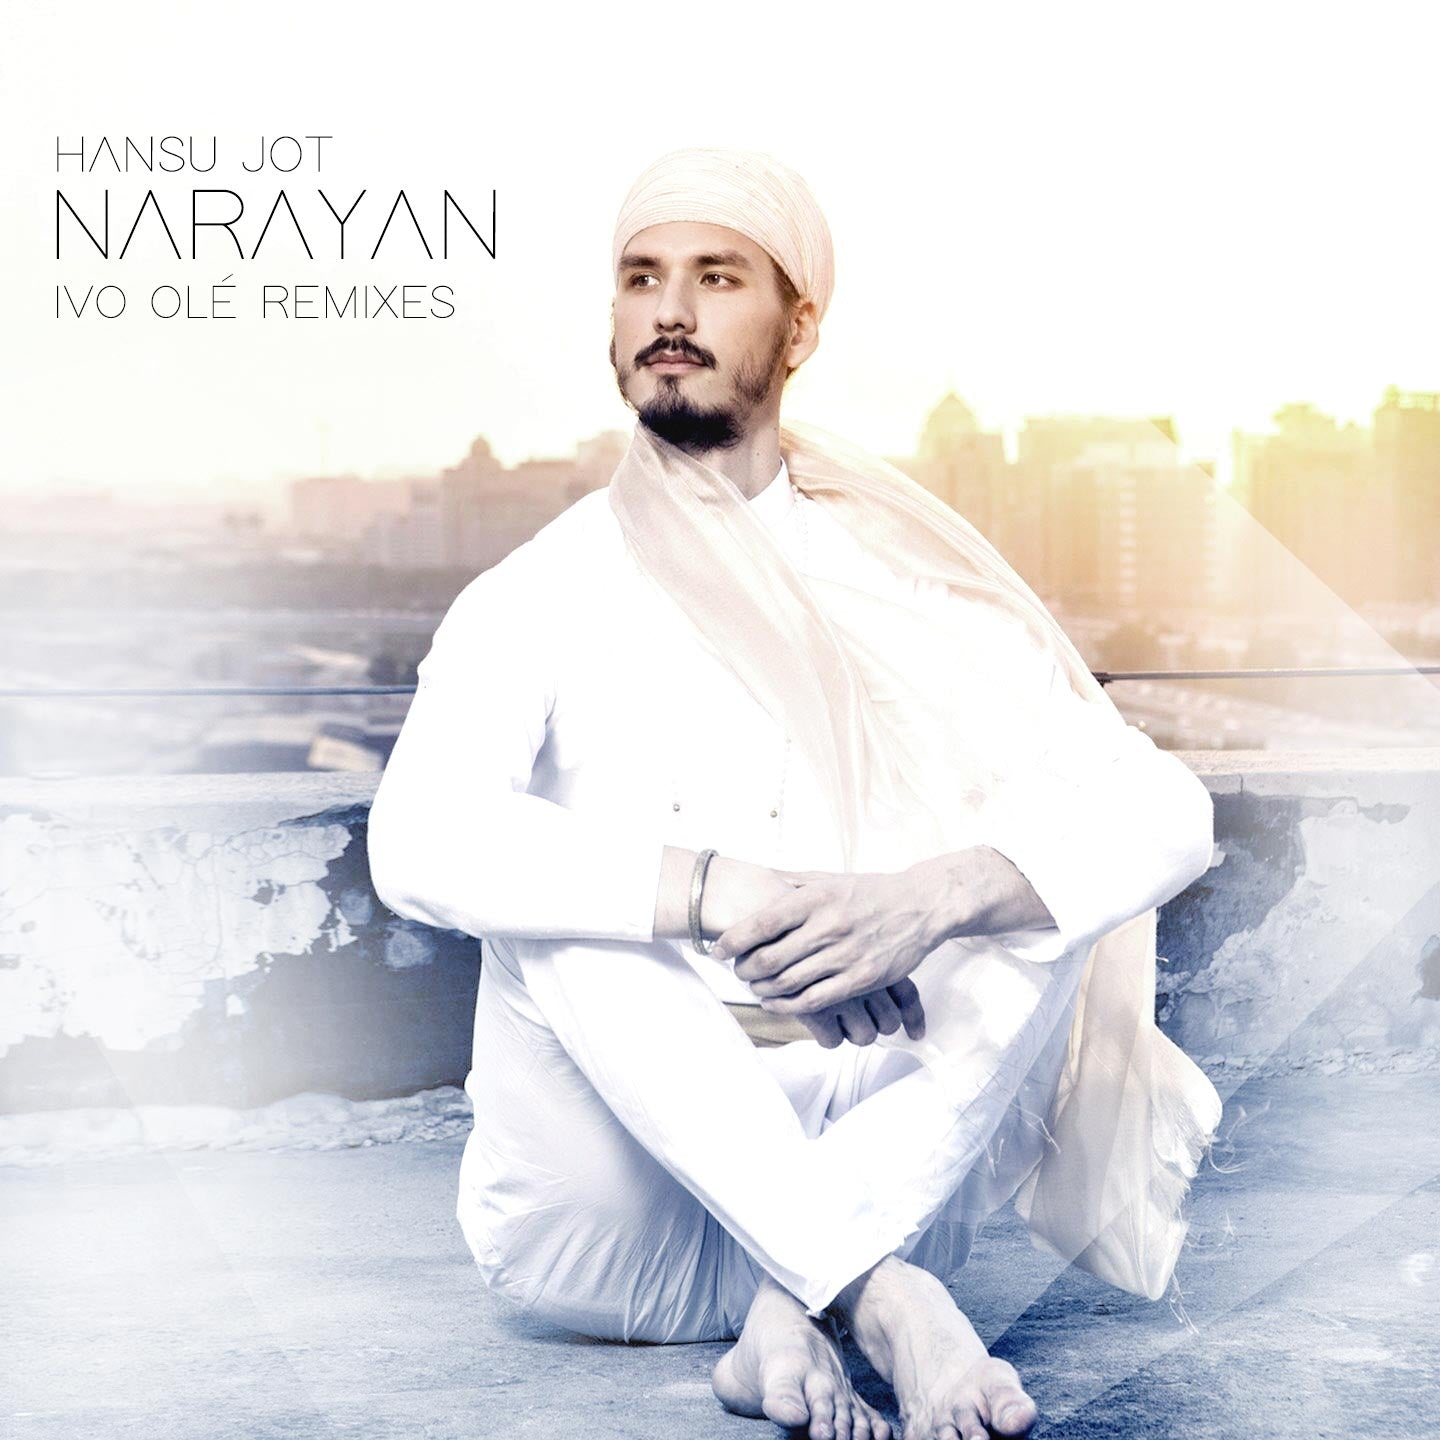 Narayan Ivo Ole Remixes - Hansu Jot - complete